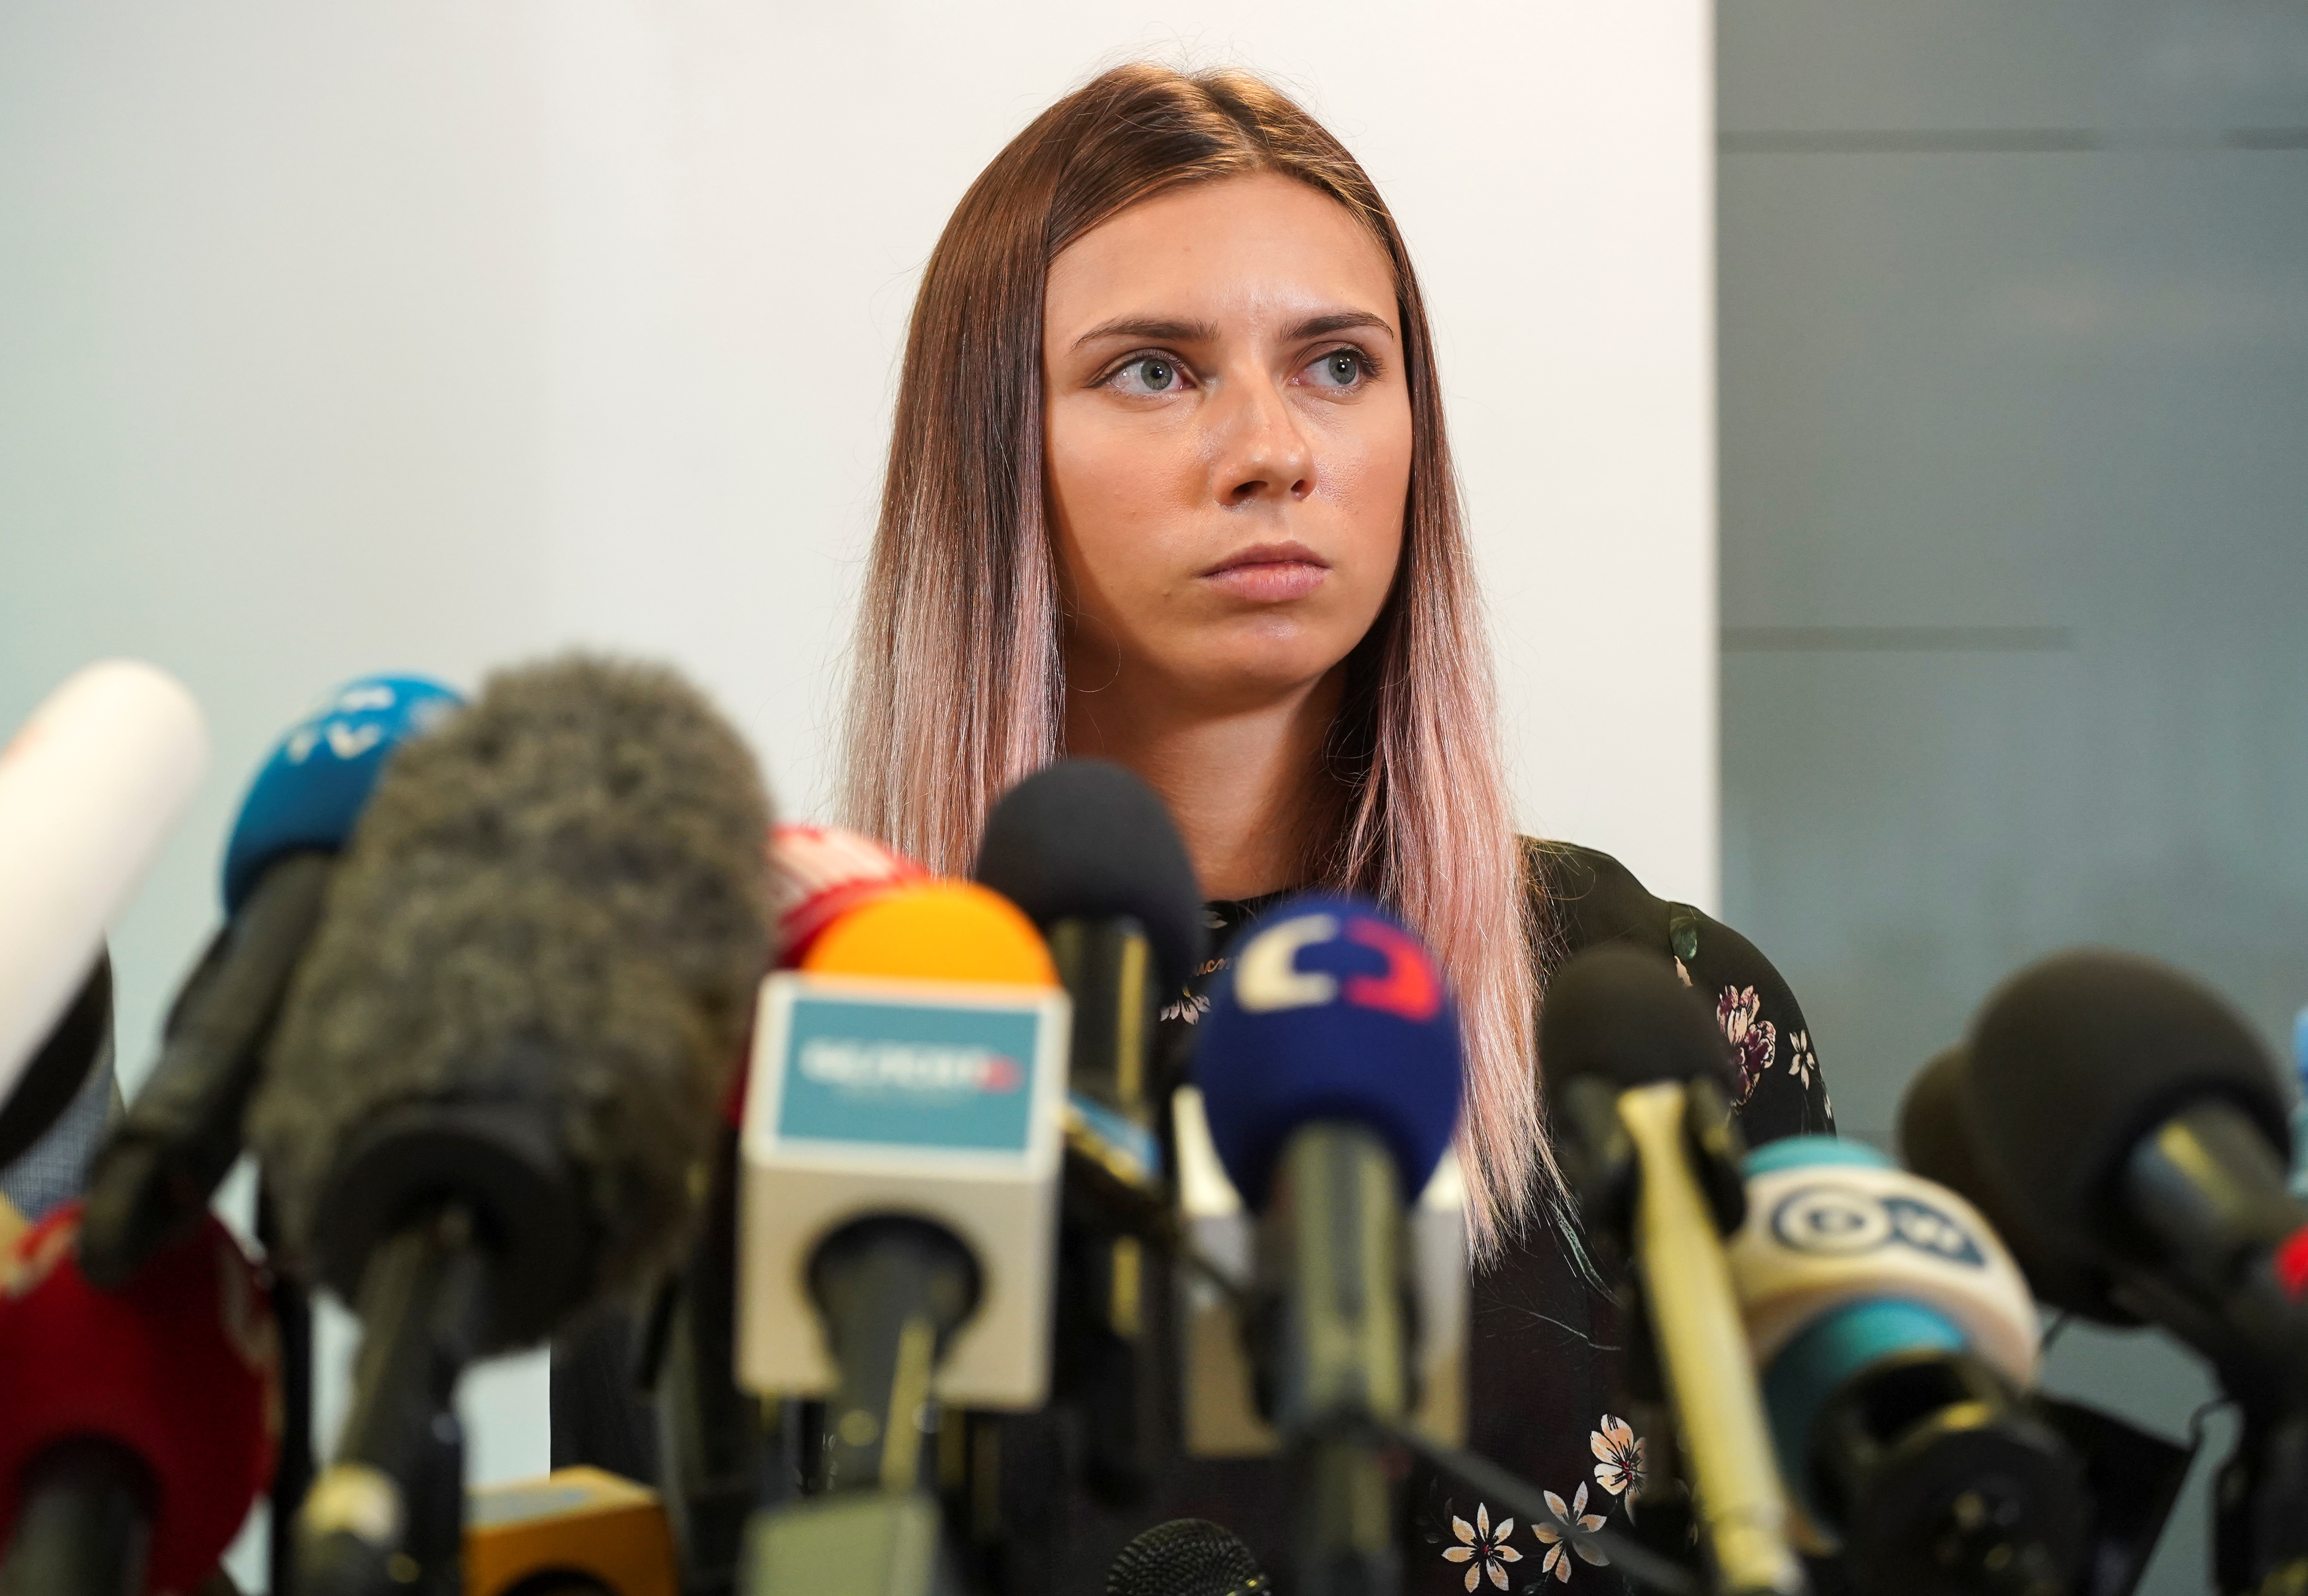 Krystsina Tsimanouskaya investigation enters new phase as Athletics Integrity Unit steps in 